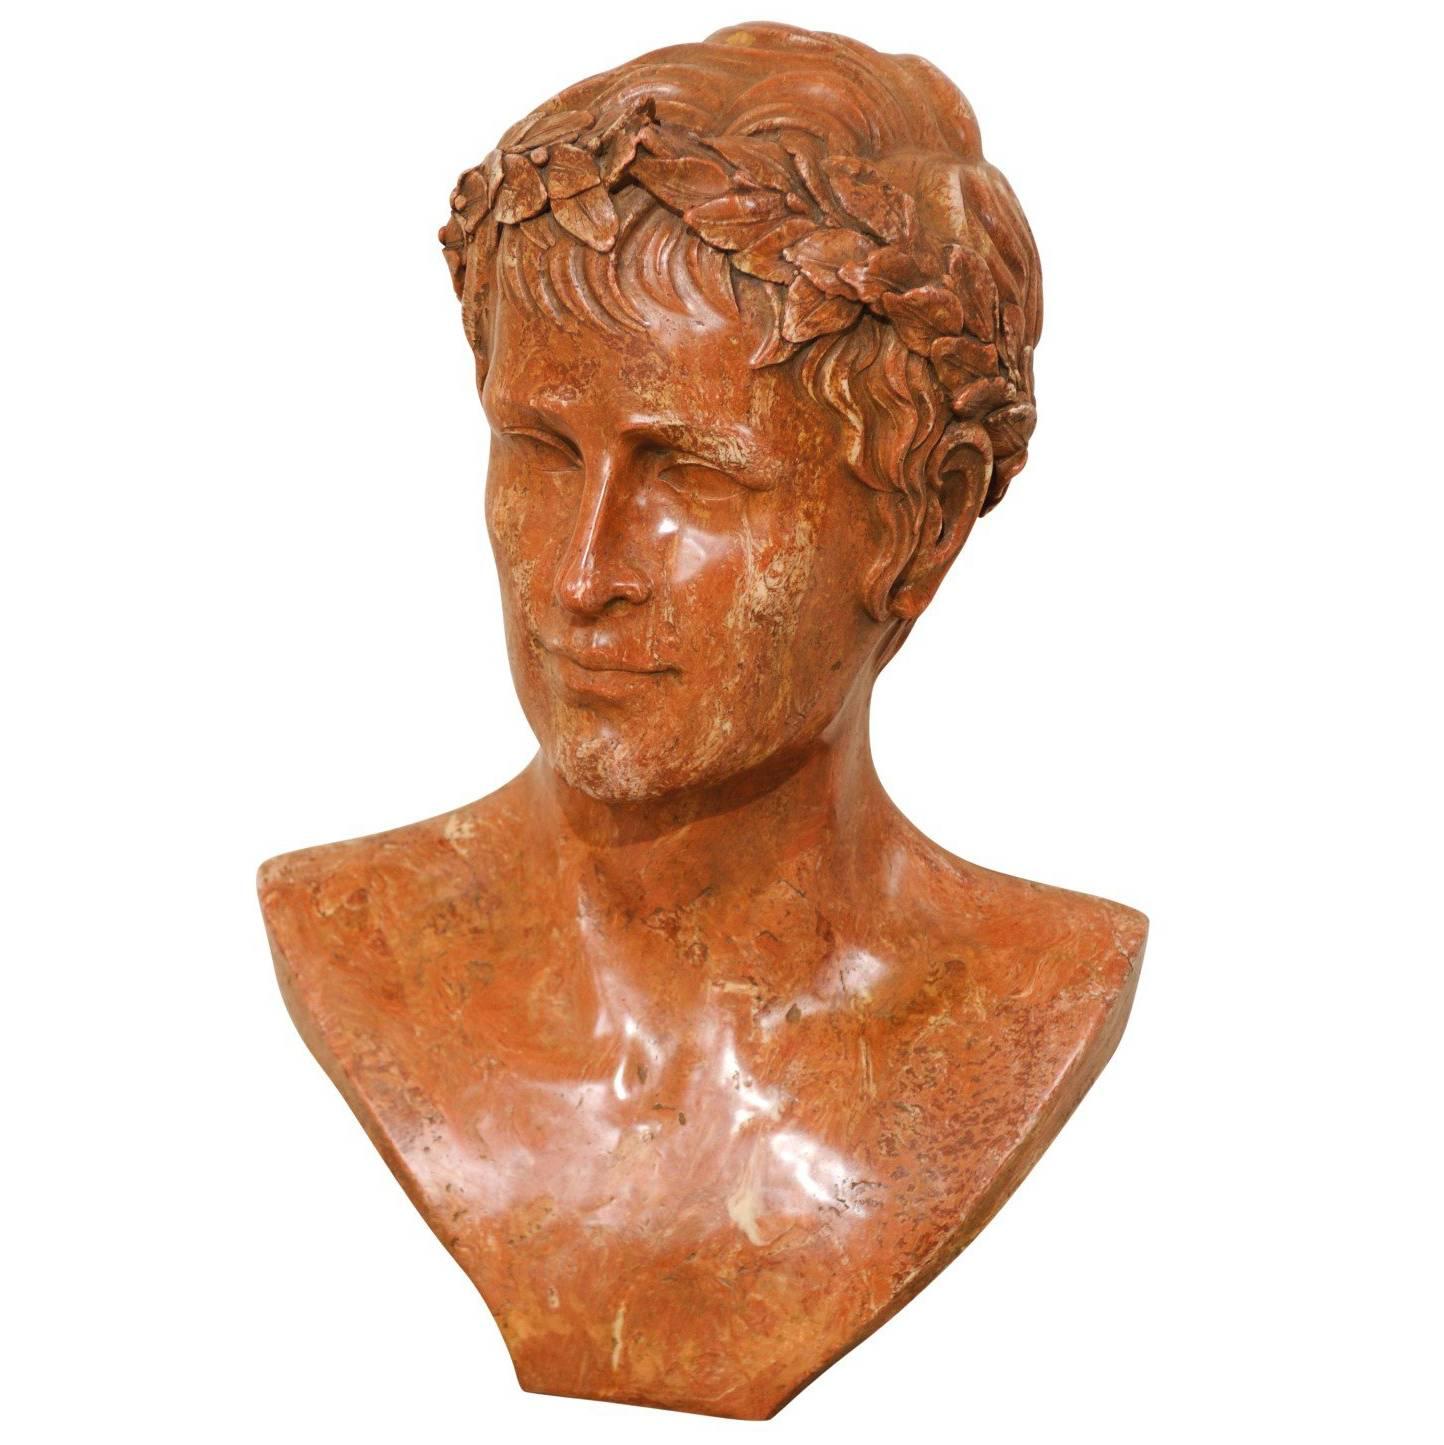 Marbleized Resin Bust of an Unknown Roman Emperor Wearing a Wreath Headband